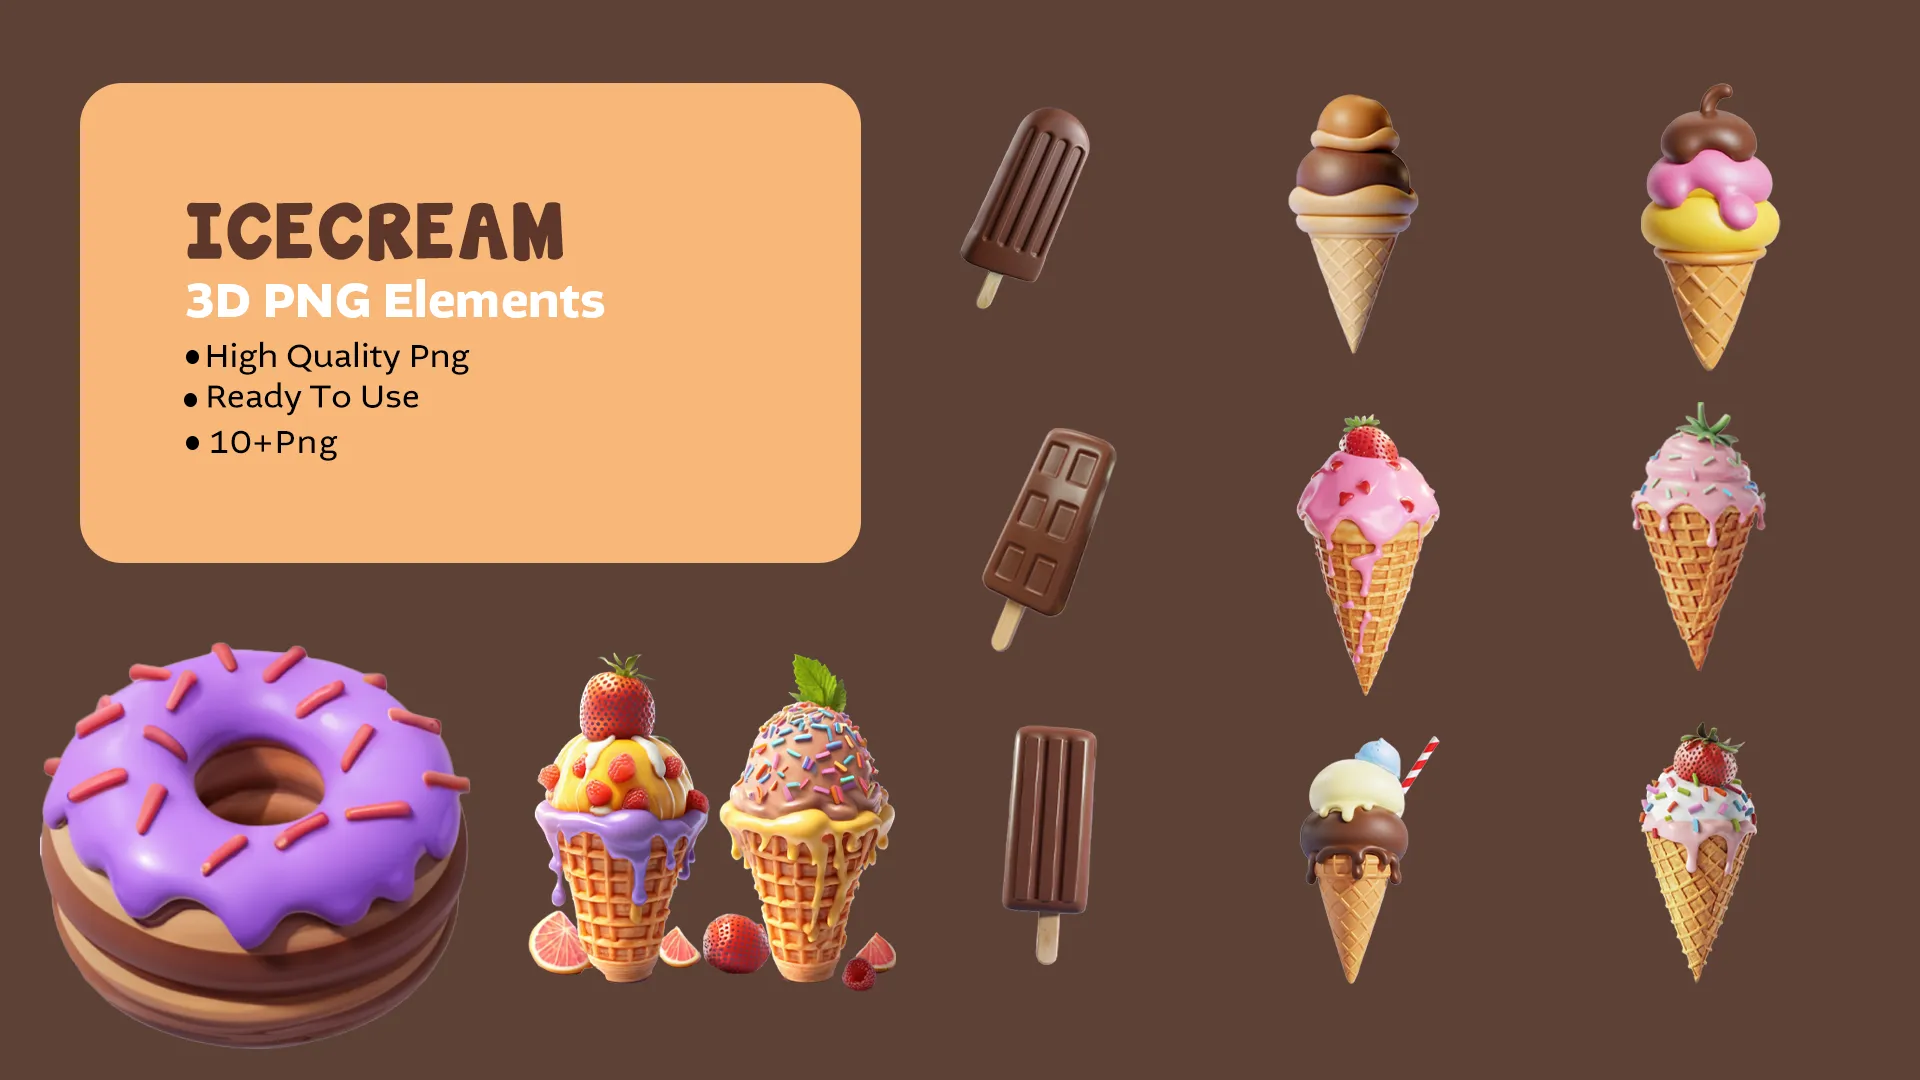 Delicious Ice Cream Varieties 3D Pack for Dessert Blogs